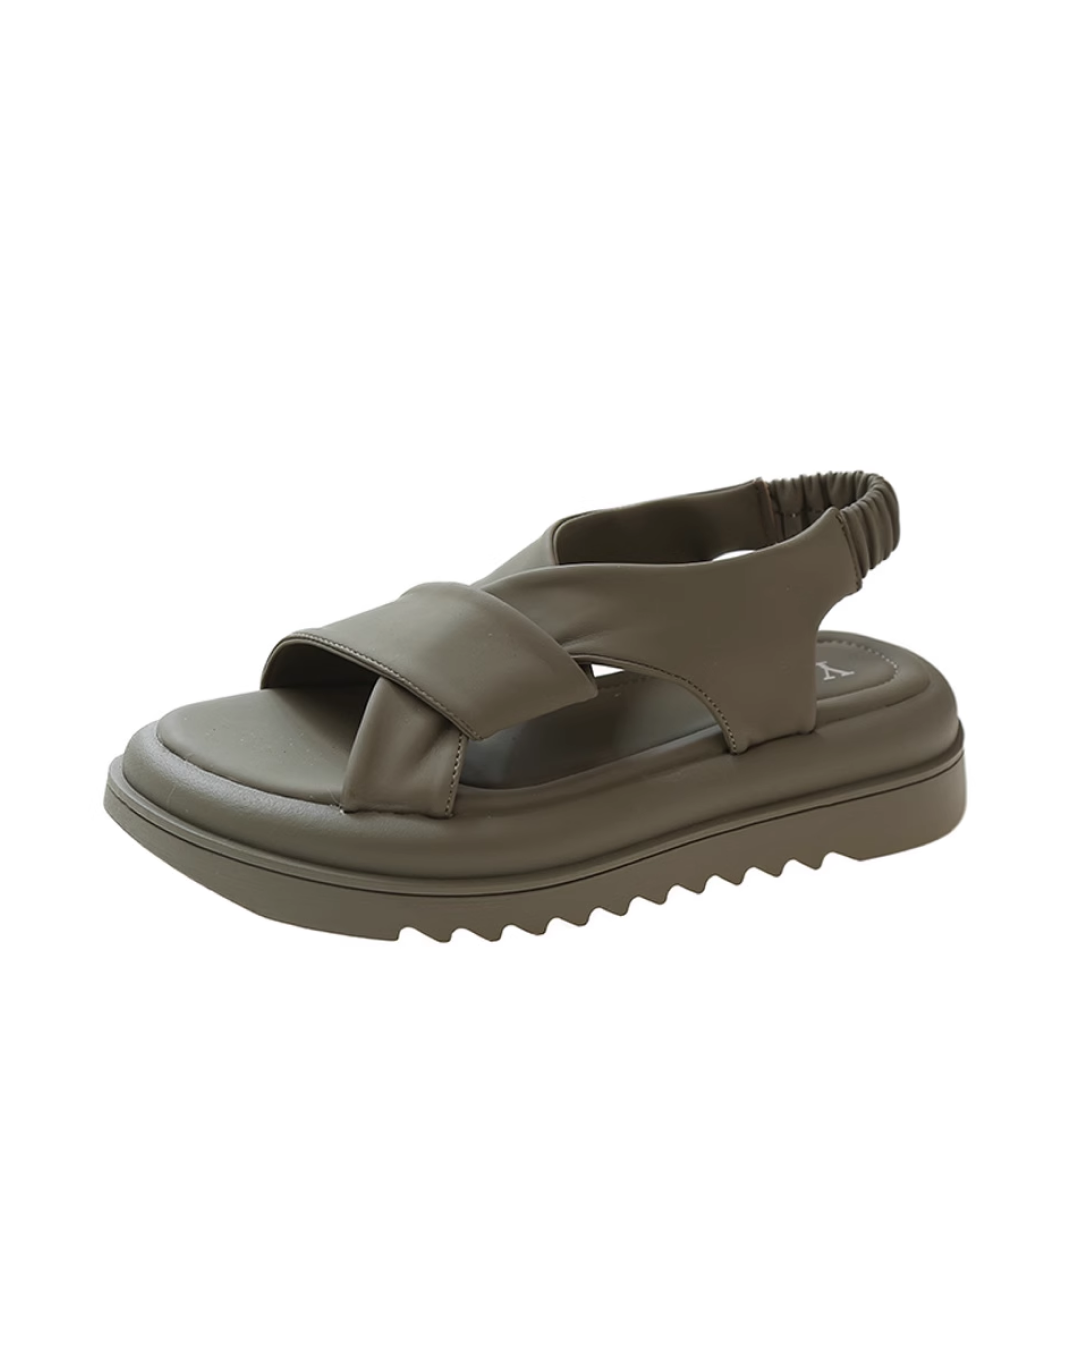 Soft sole sandals M0009